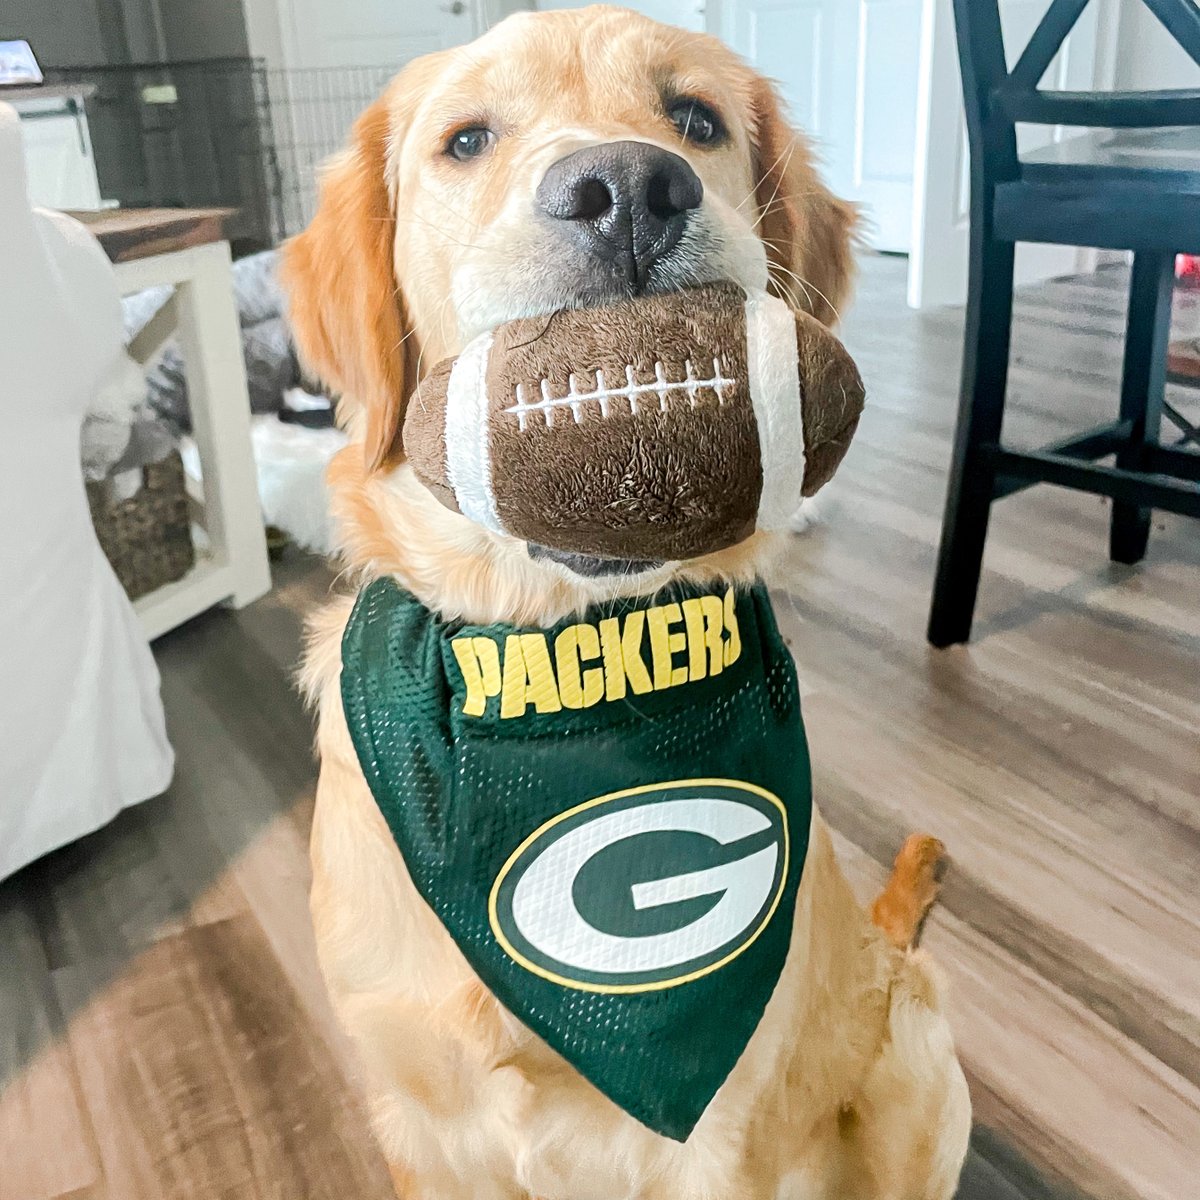 Maverick + #Packers football = the pawfect match! 🐶🏈
 
#GoPackGo